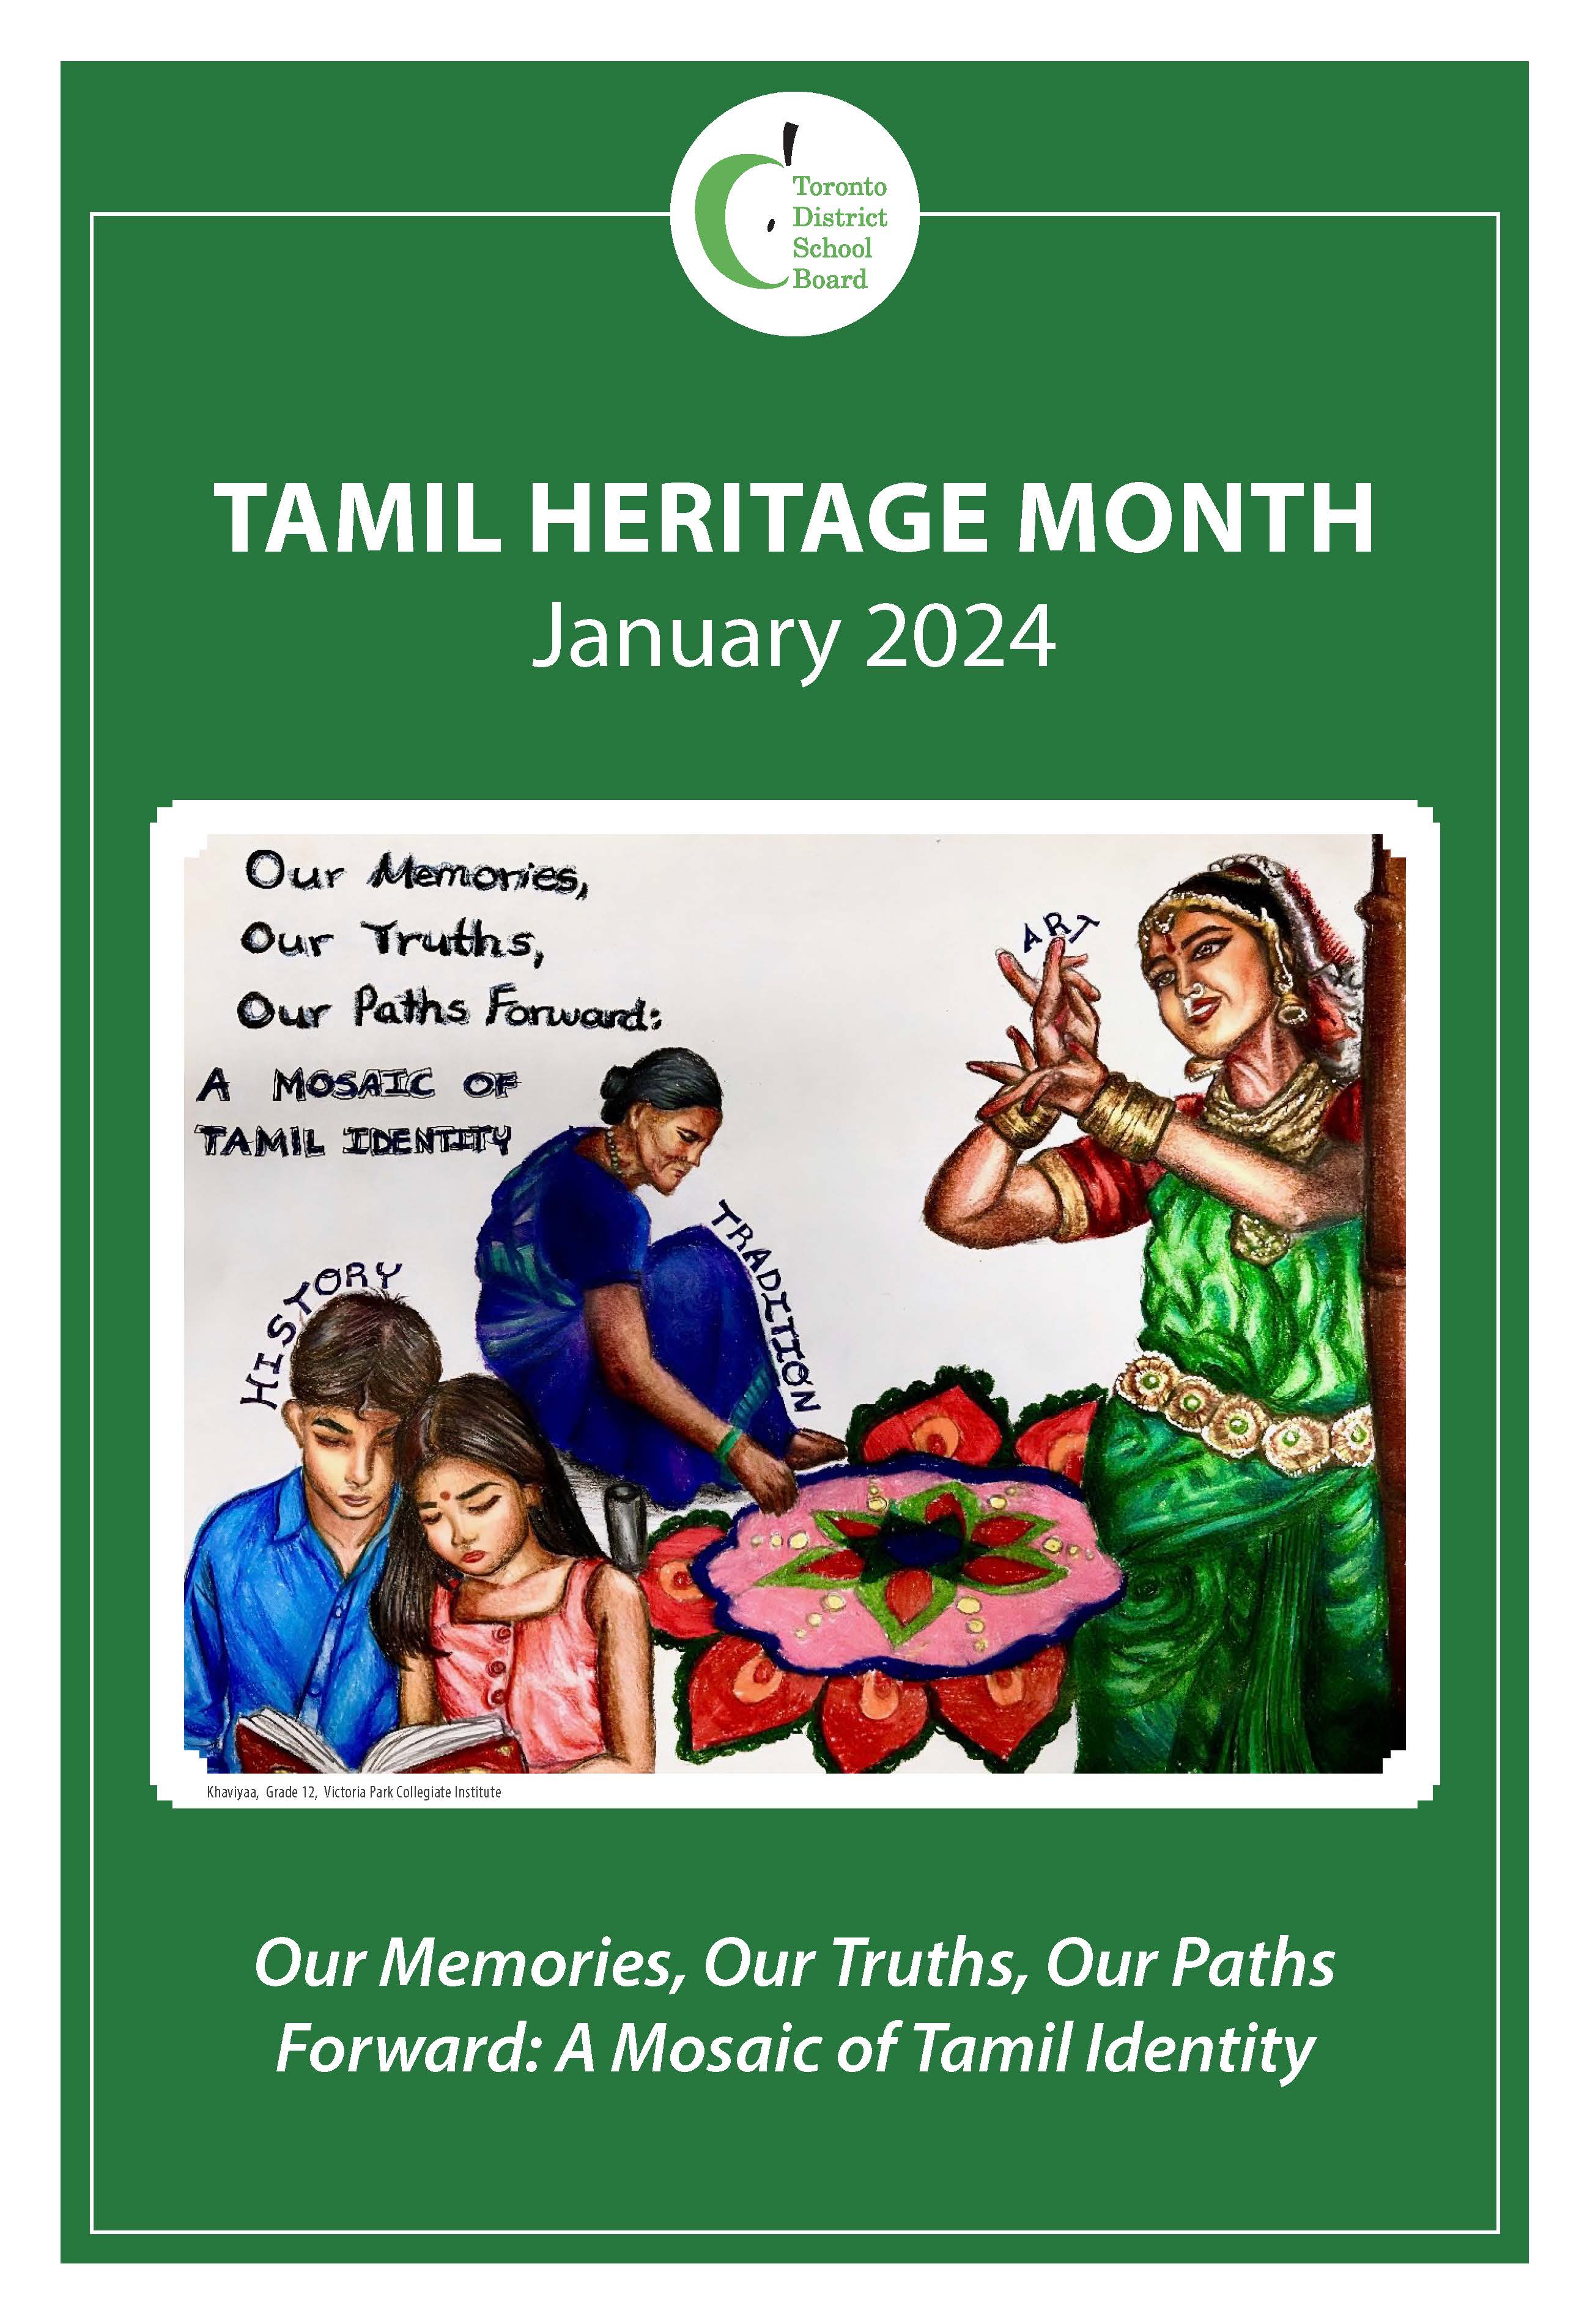 Tamil Heritage Month post 3